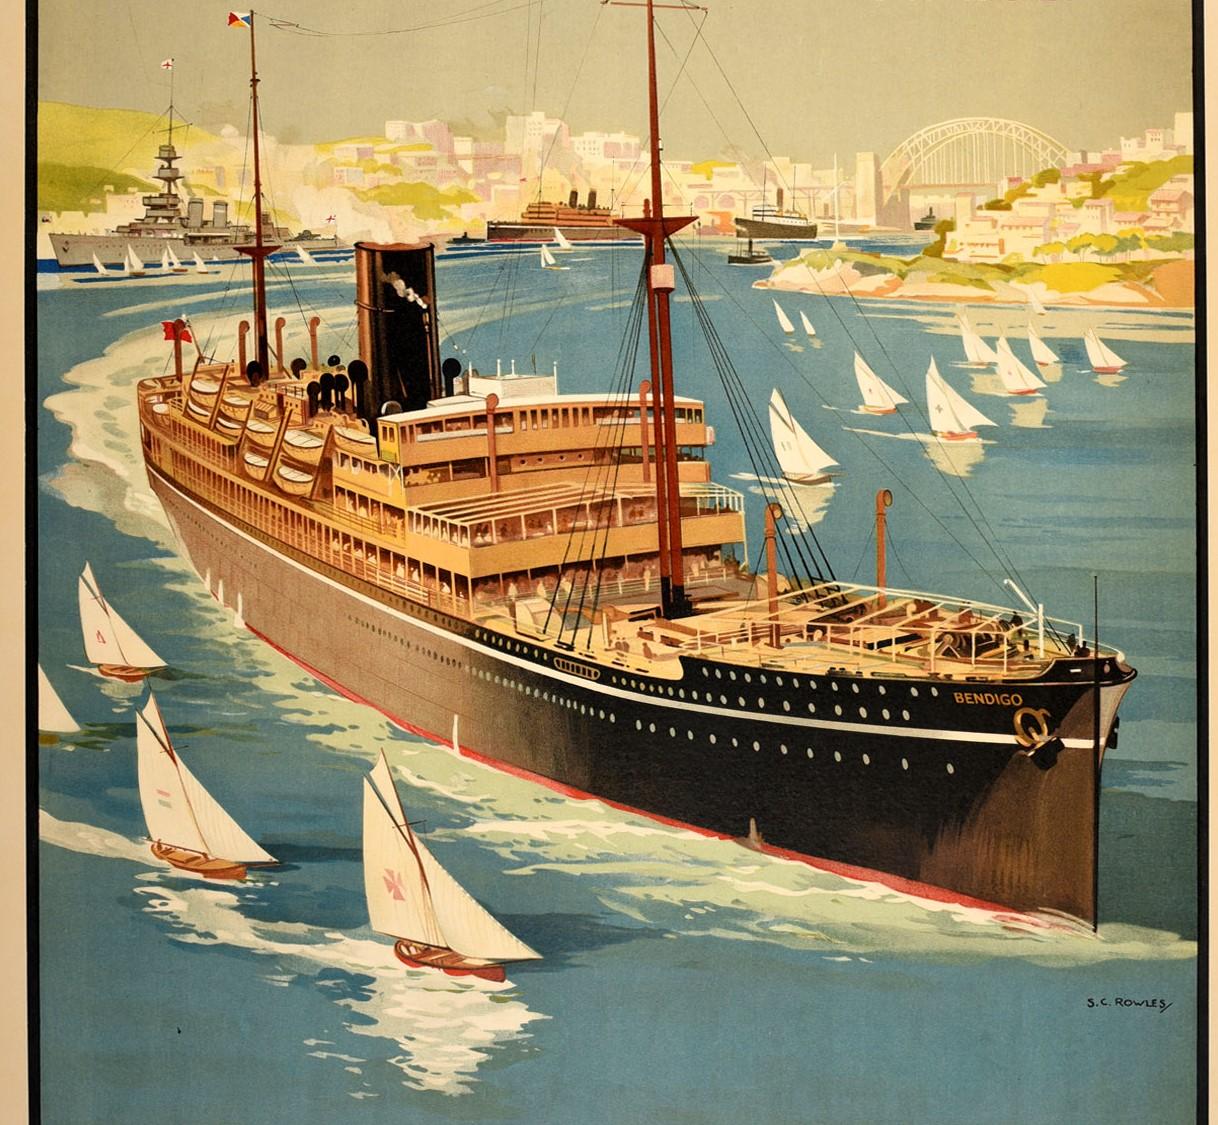 Original Vintage Travel Poster P&O Australia Malta Egypt Ceylon Sydney Harbour - Print by S C Rowles